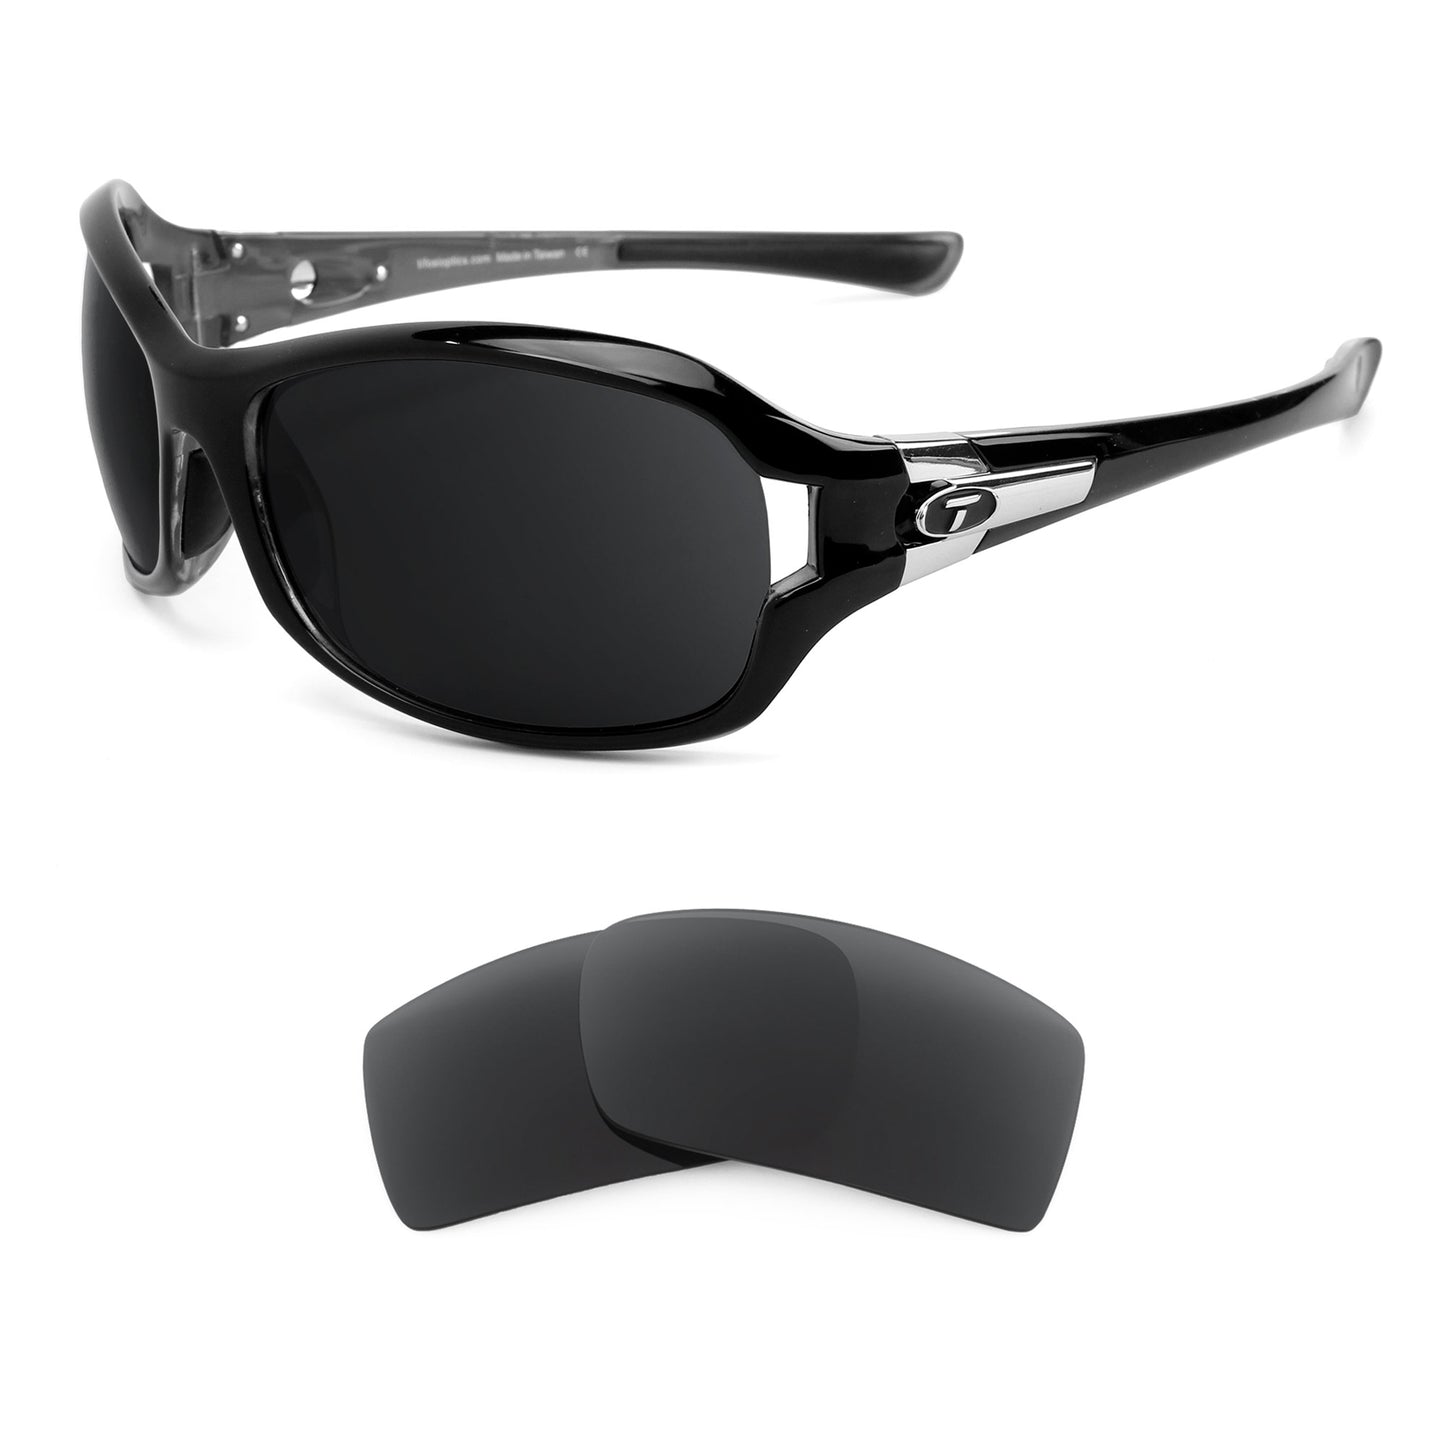 Tifosi Dea SL sunglasses with replacement lenses